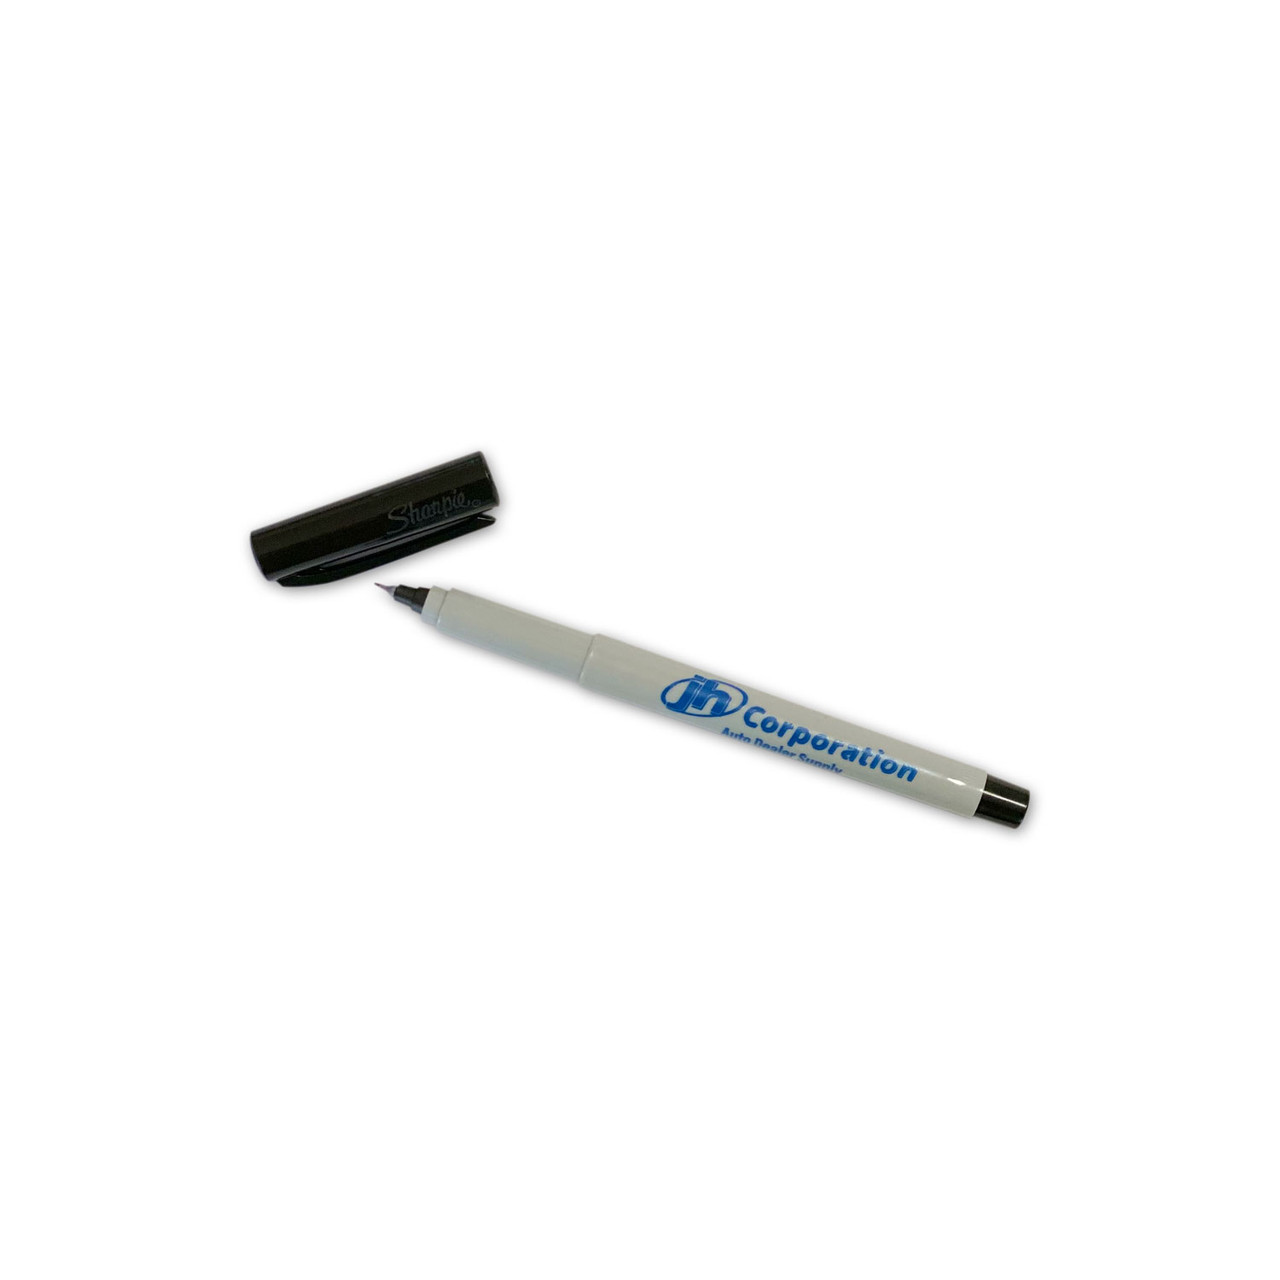 Sharpie® Ultra Fine Markers - Black